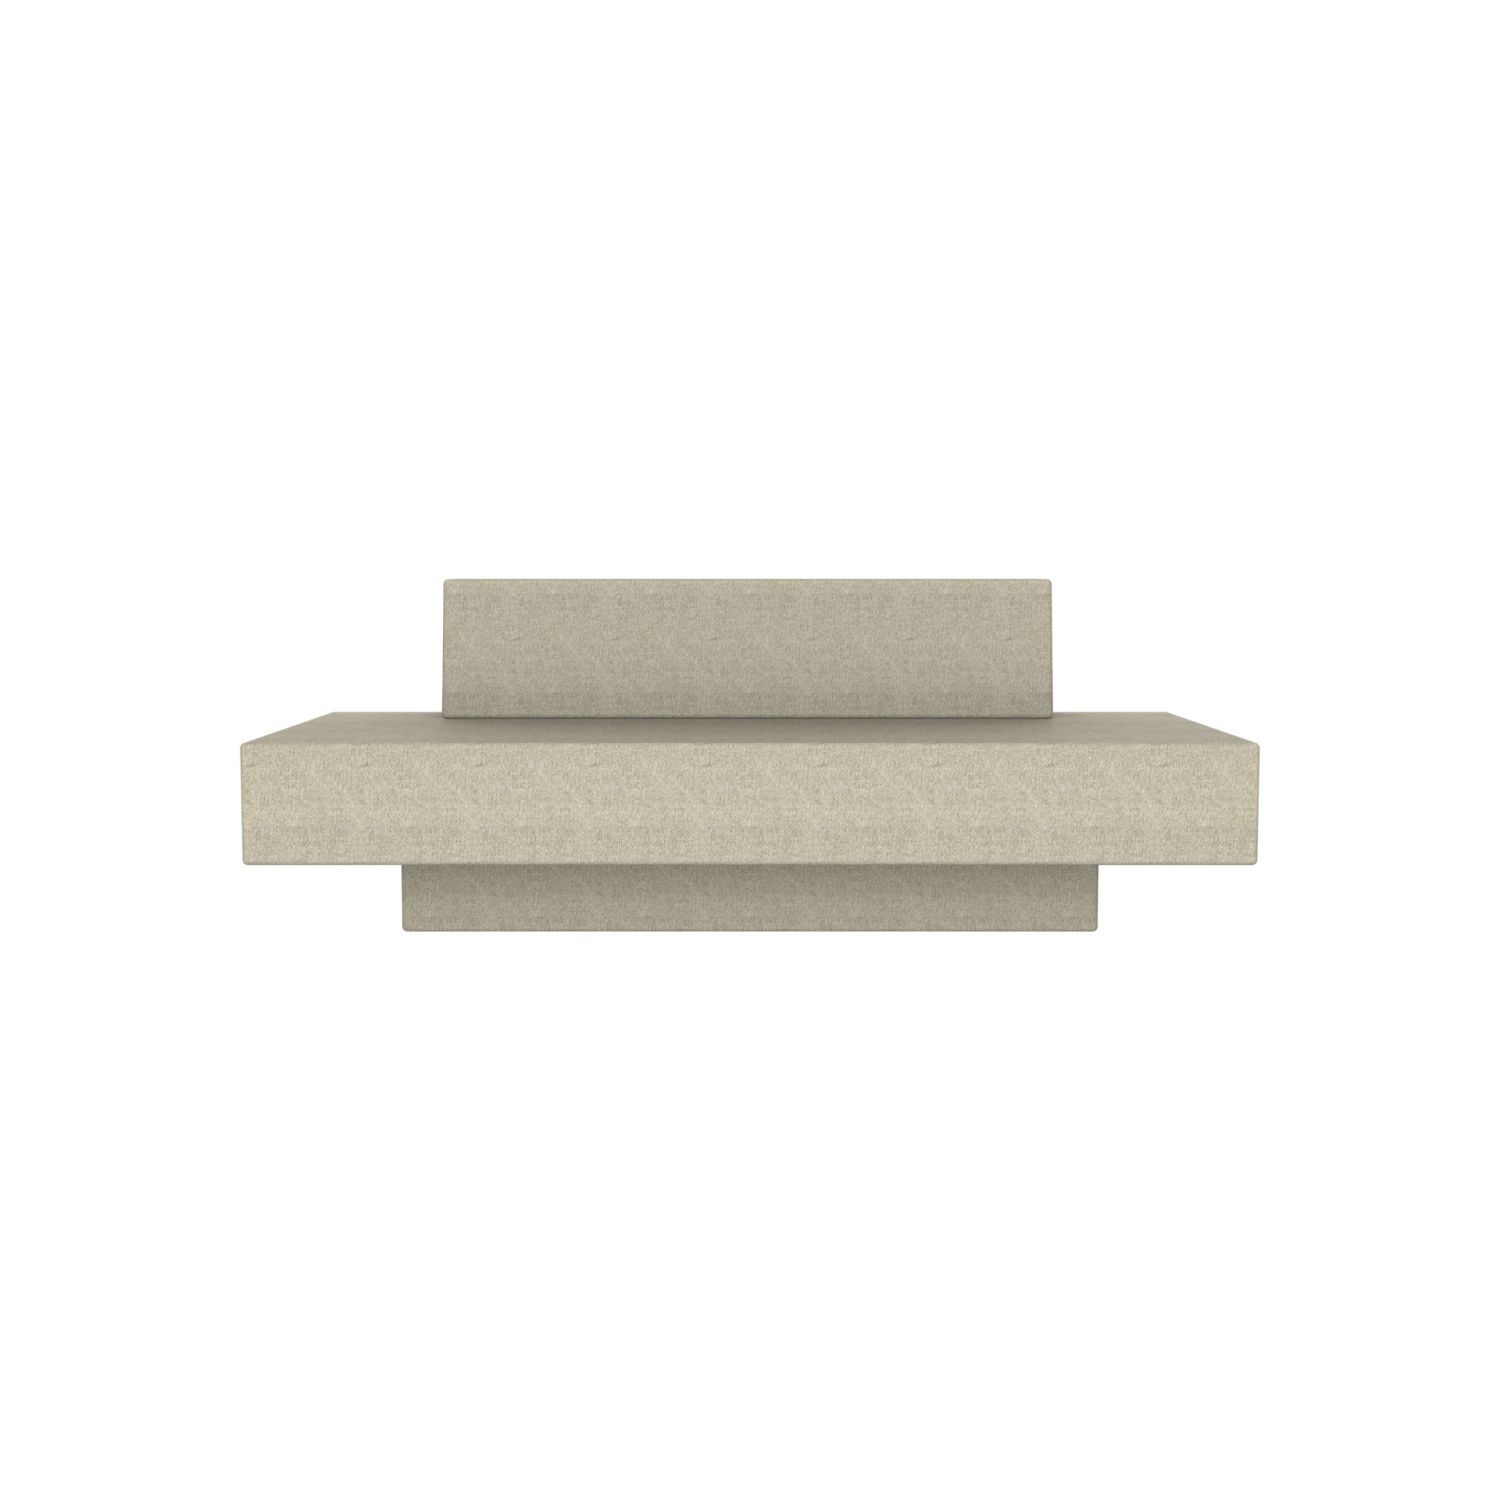 lensvelt atelier van lieshout glyder sofa with sliding backrest 85 x 190 cm moss stone grey 11 price level 2